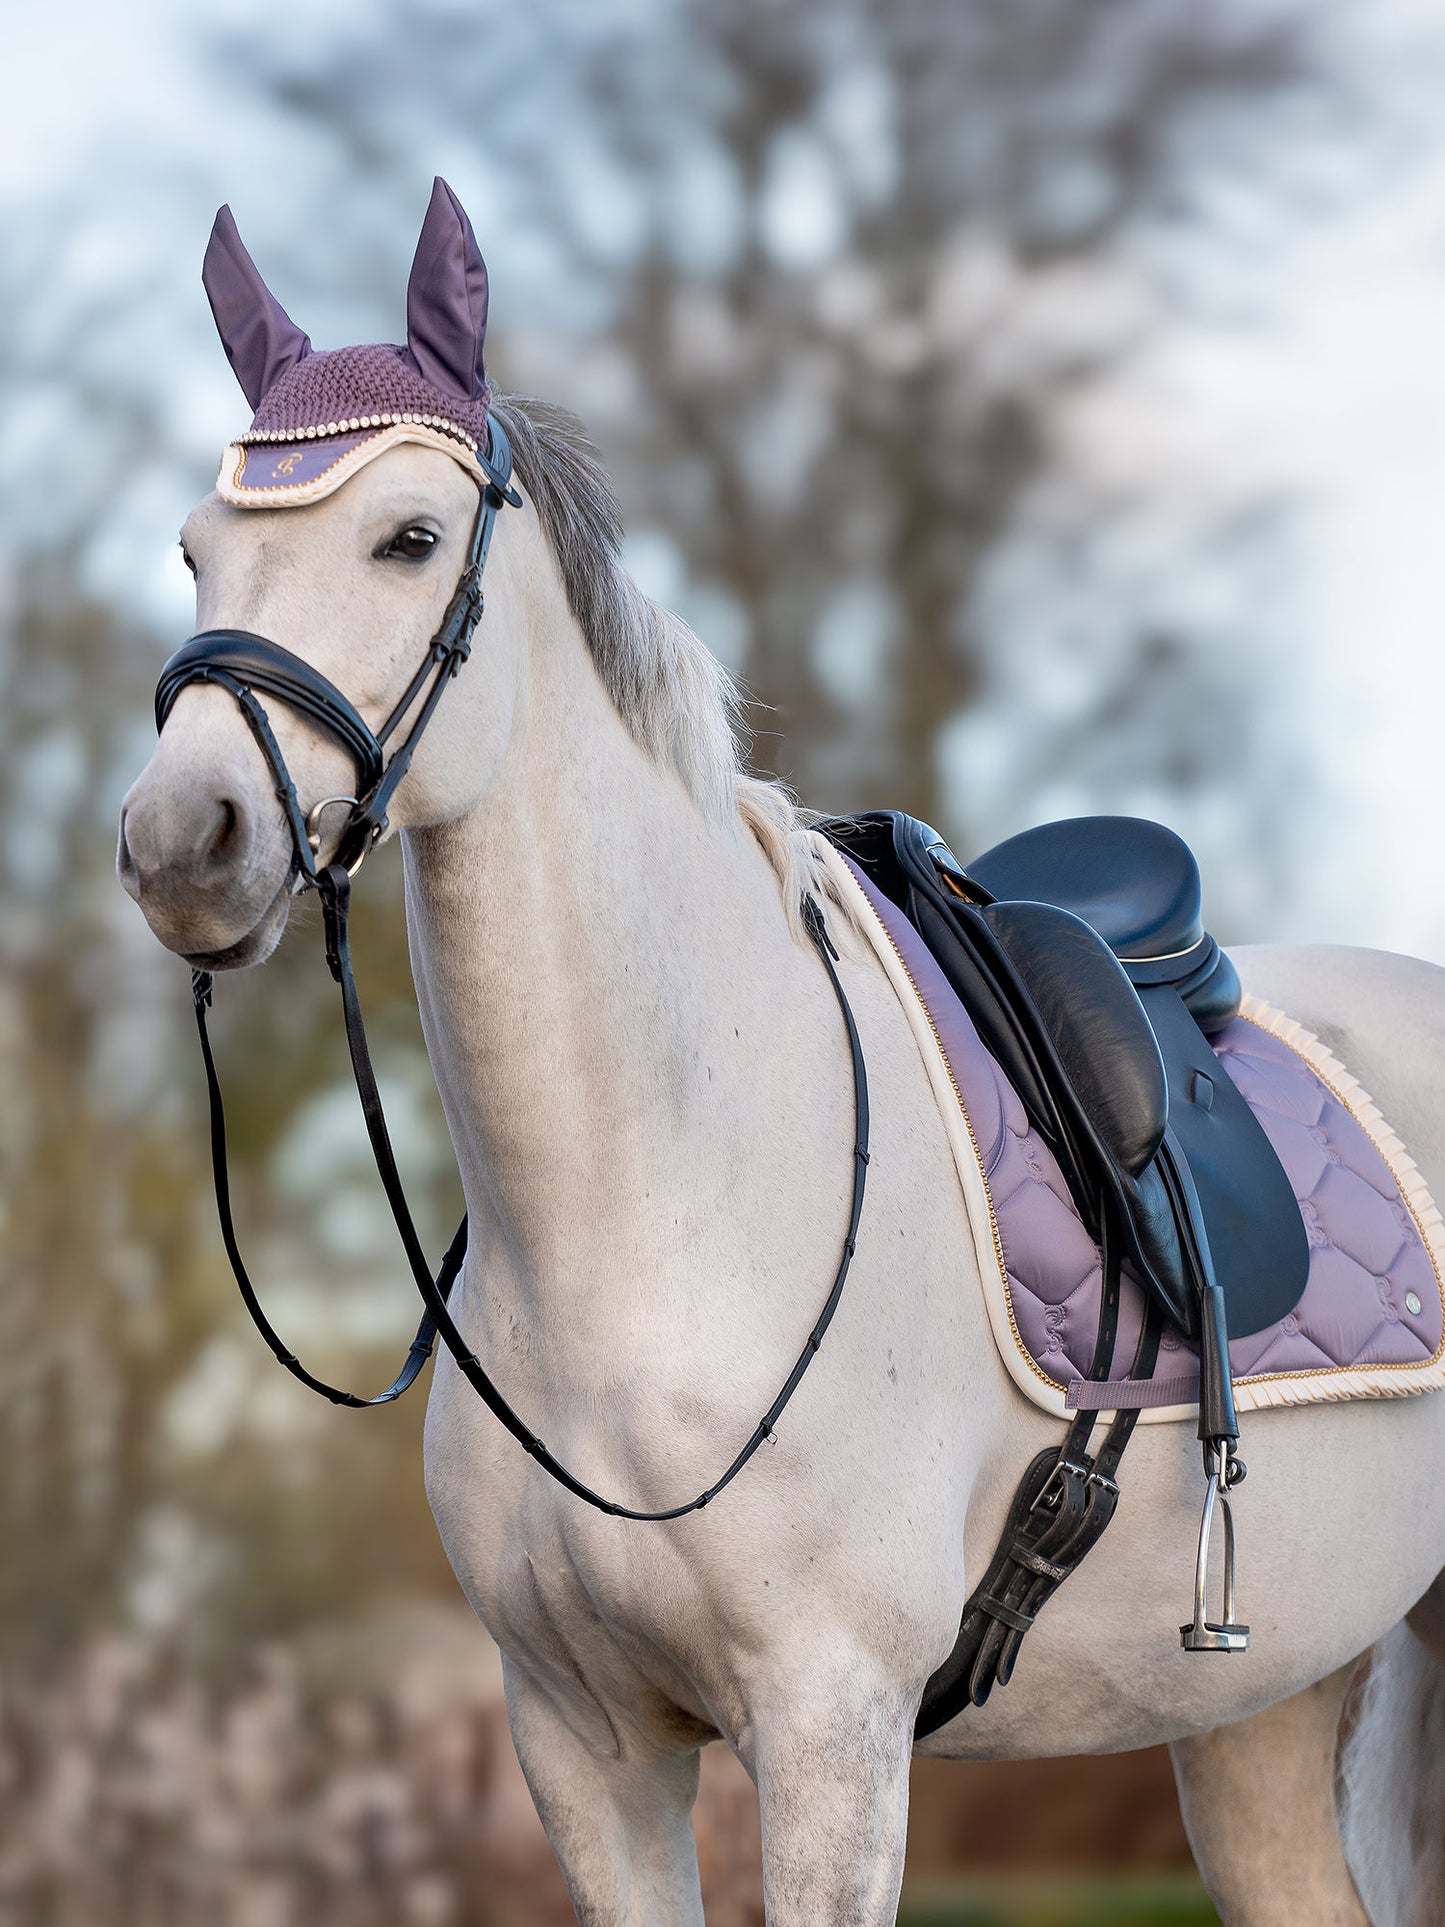 PS of Sweden -  Limited Edition Pearl Ruffle Dressage Saddlepad & Bandages Set - Lavender Grey